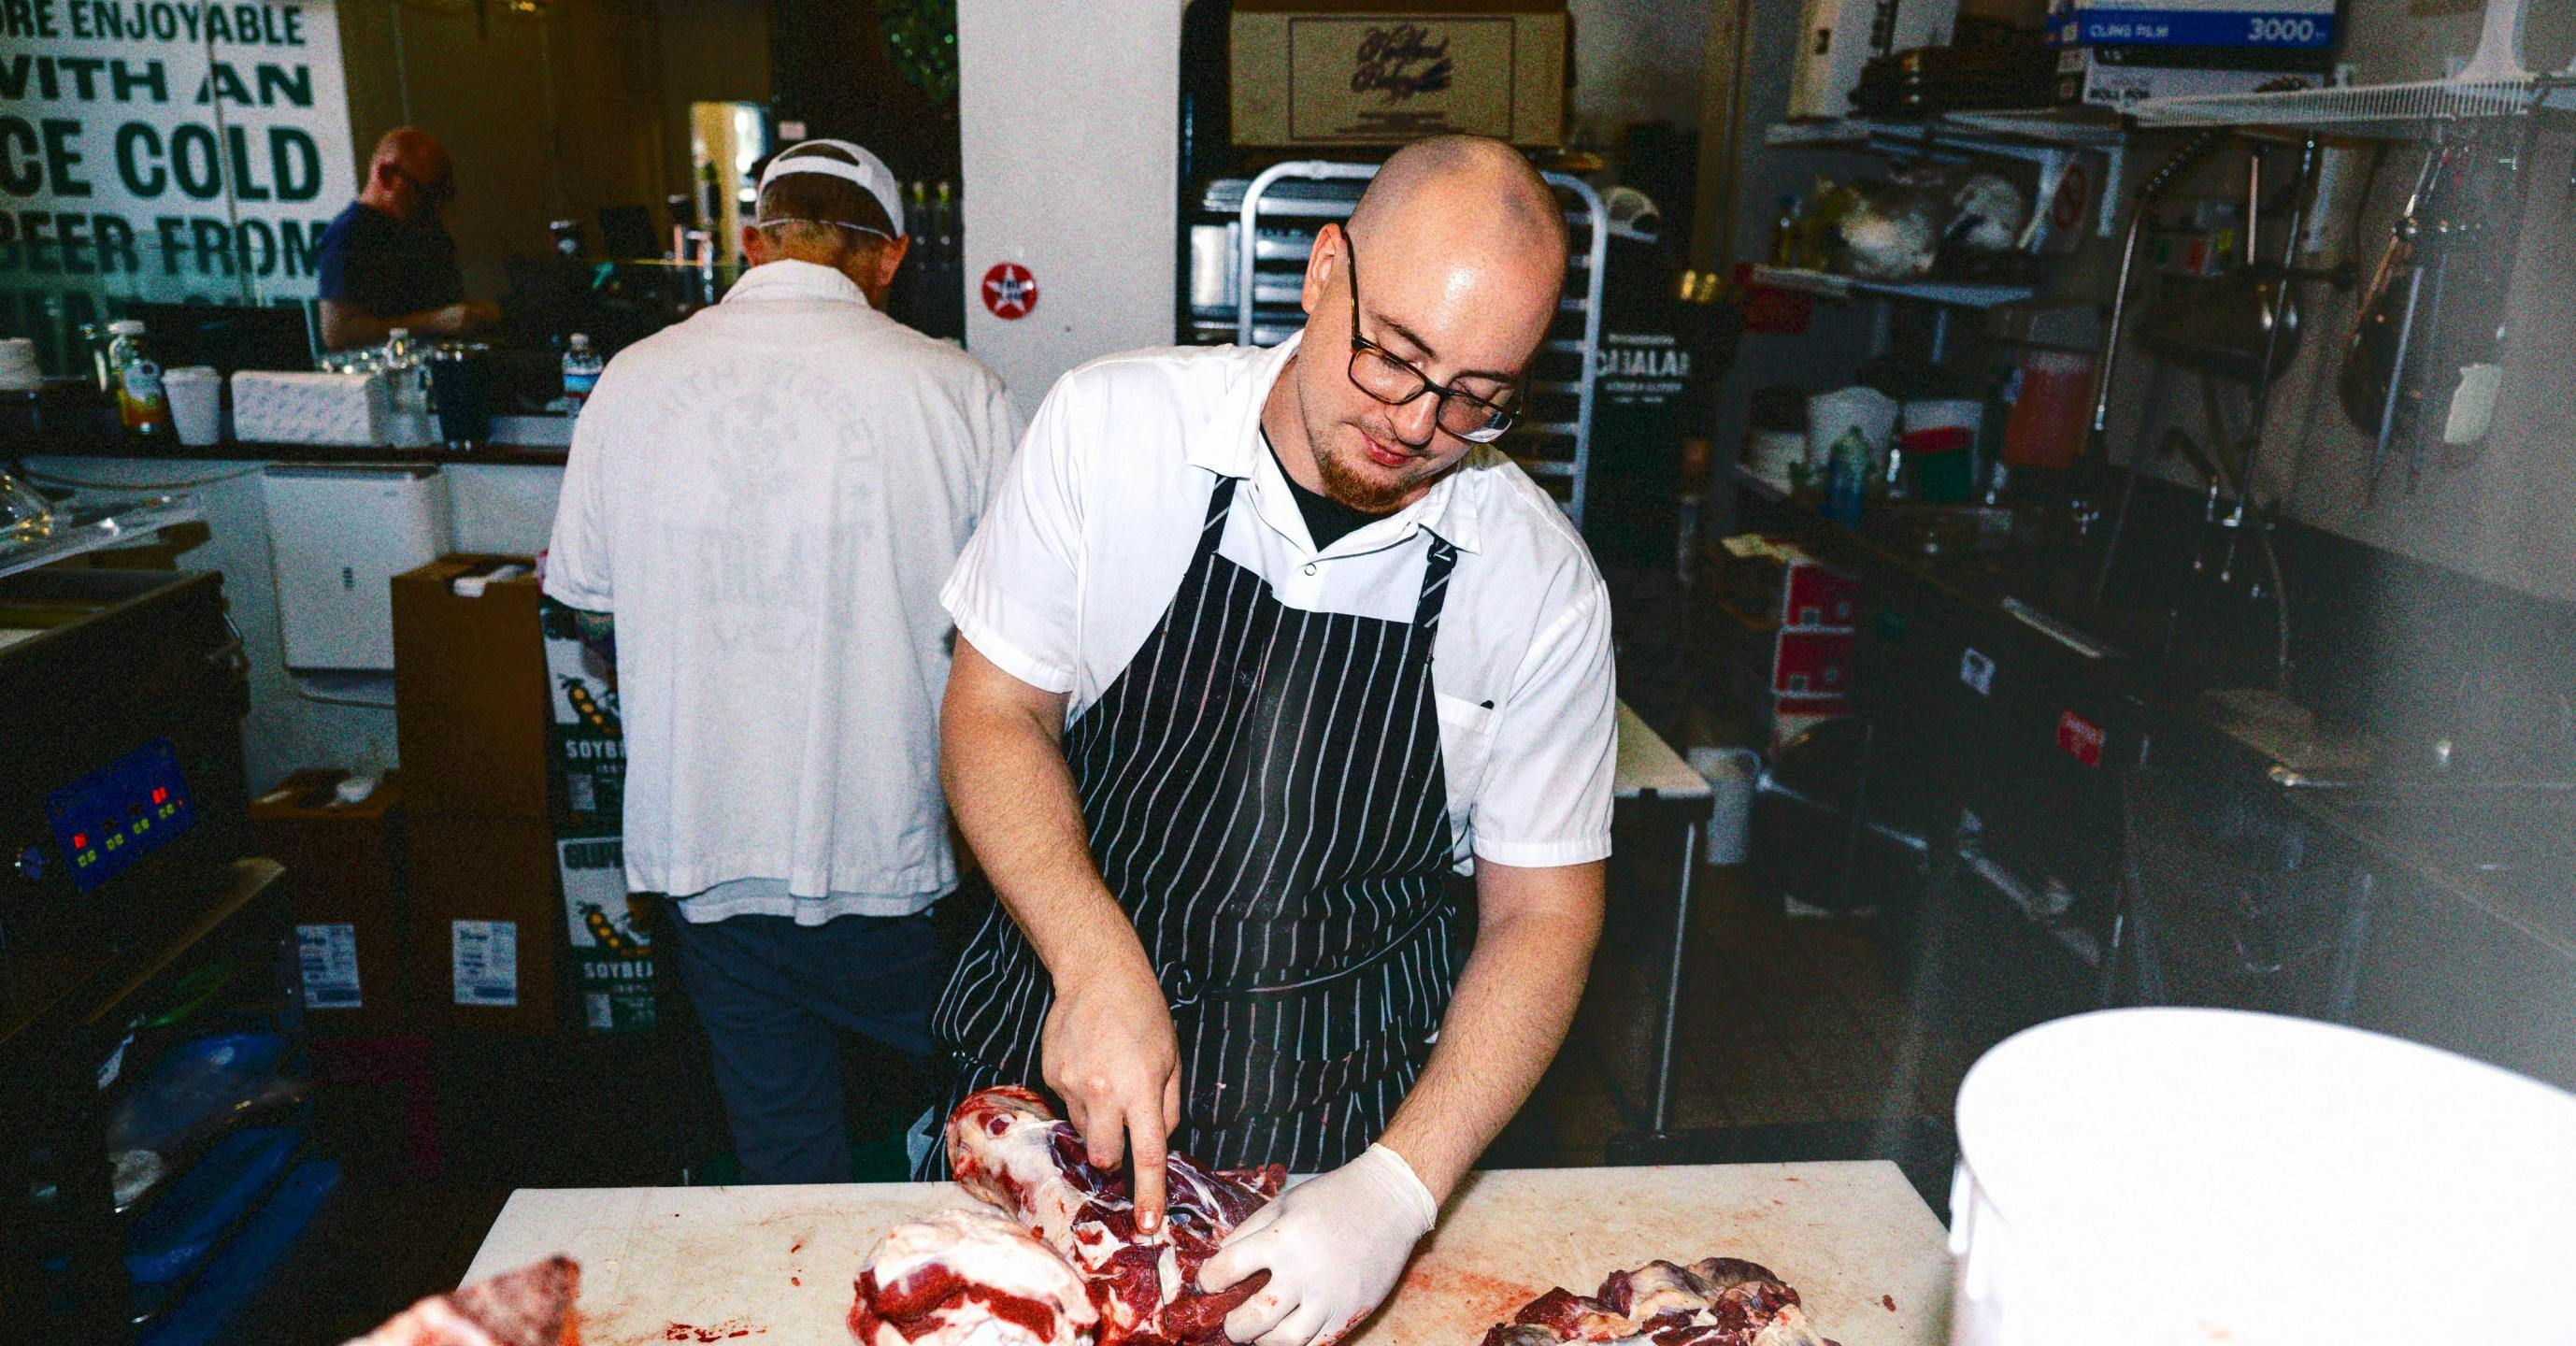 Steve Cabalar cutting meat